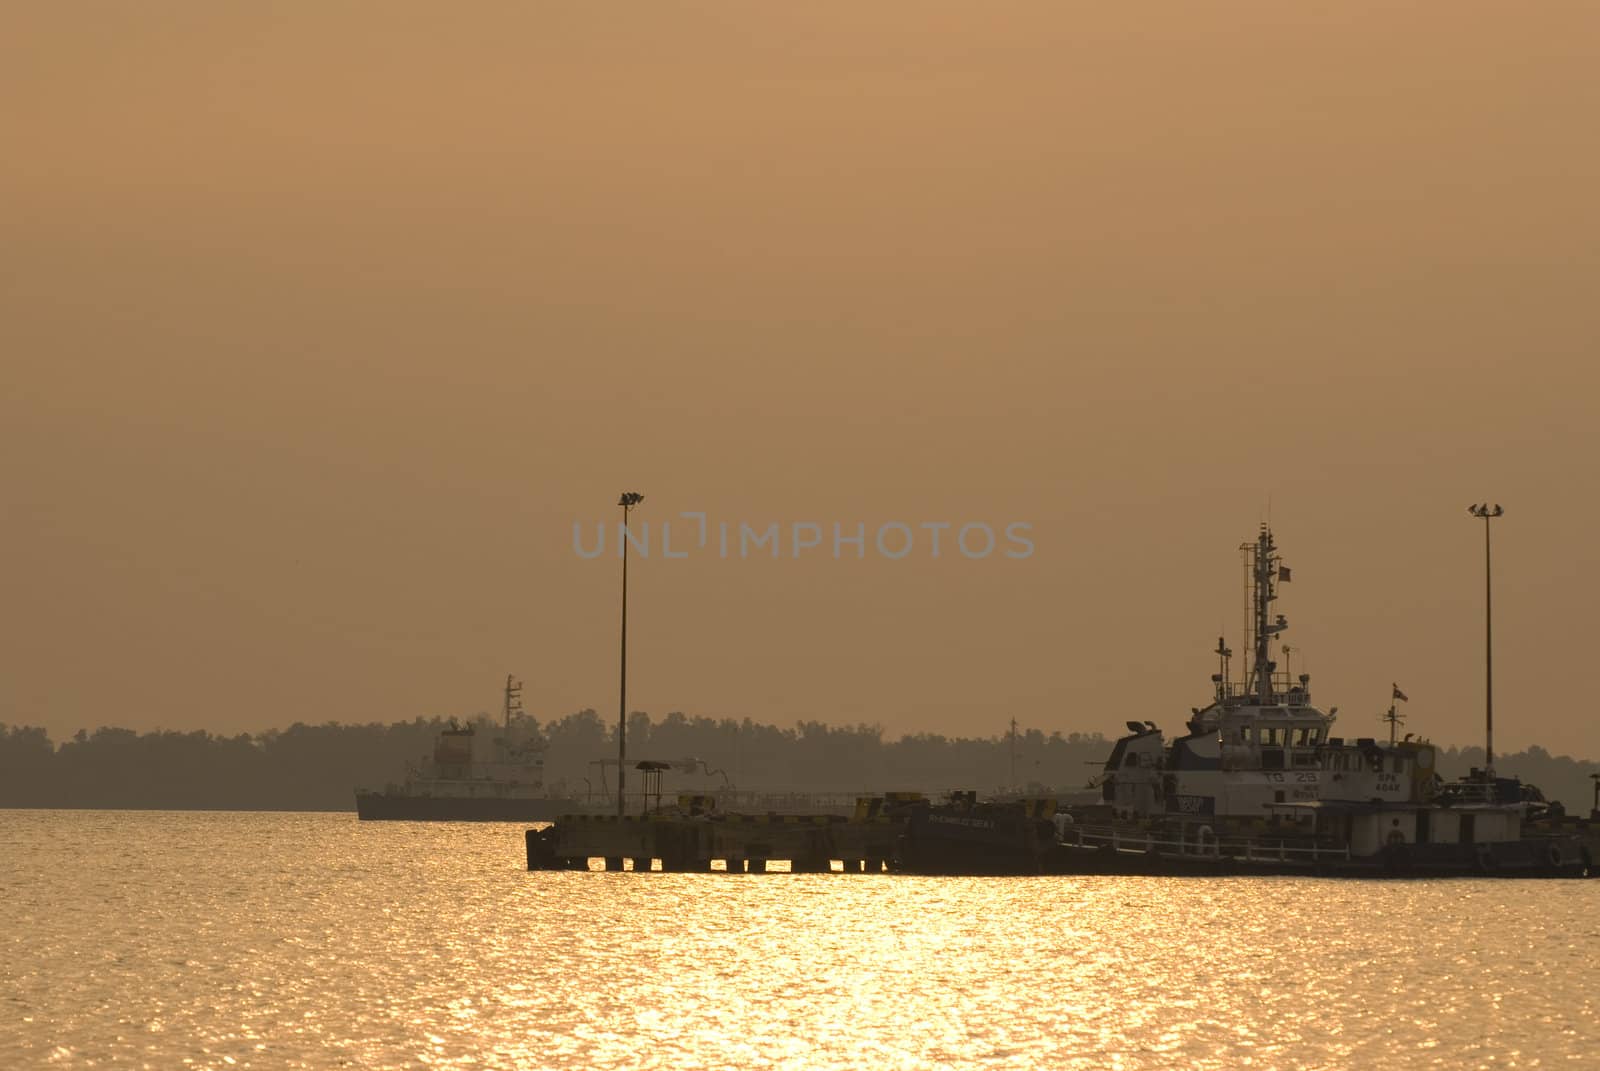 ship yard during sunset by yuliang11